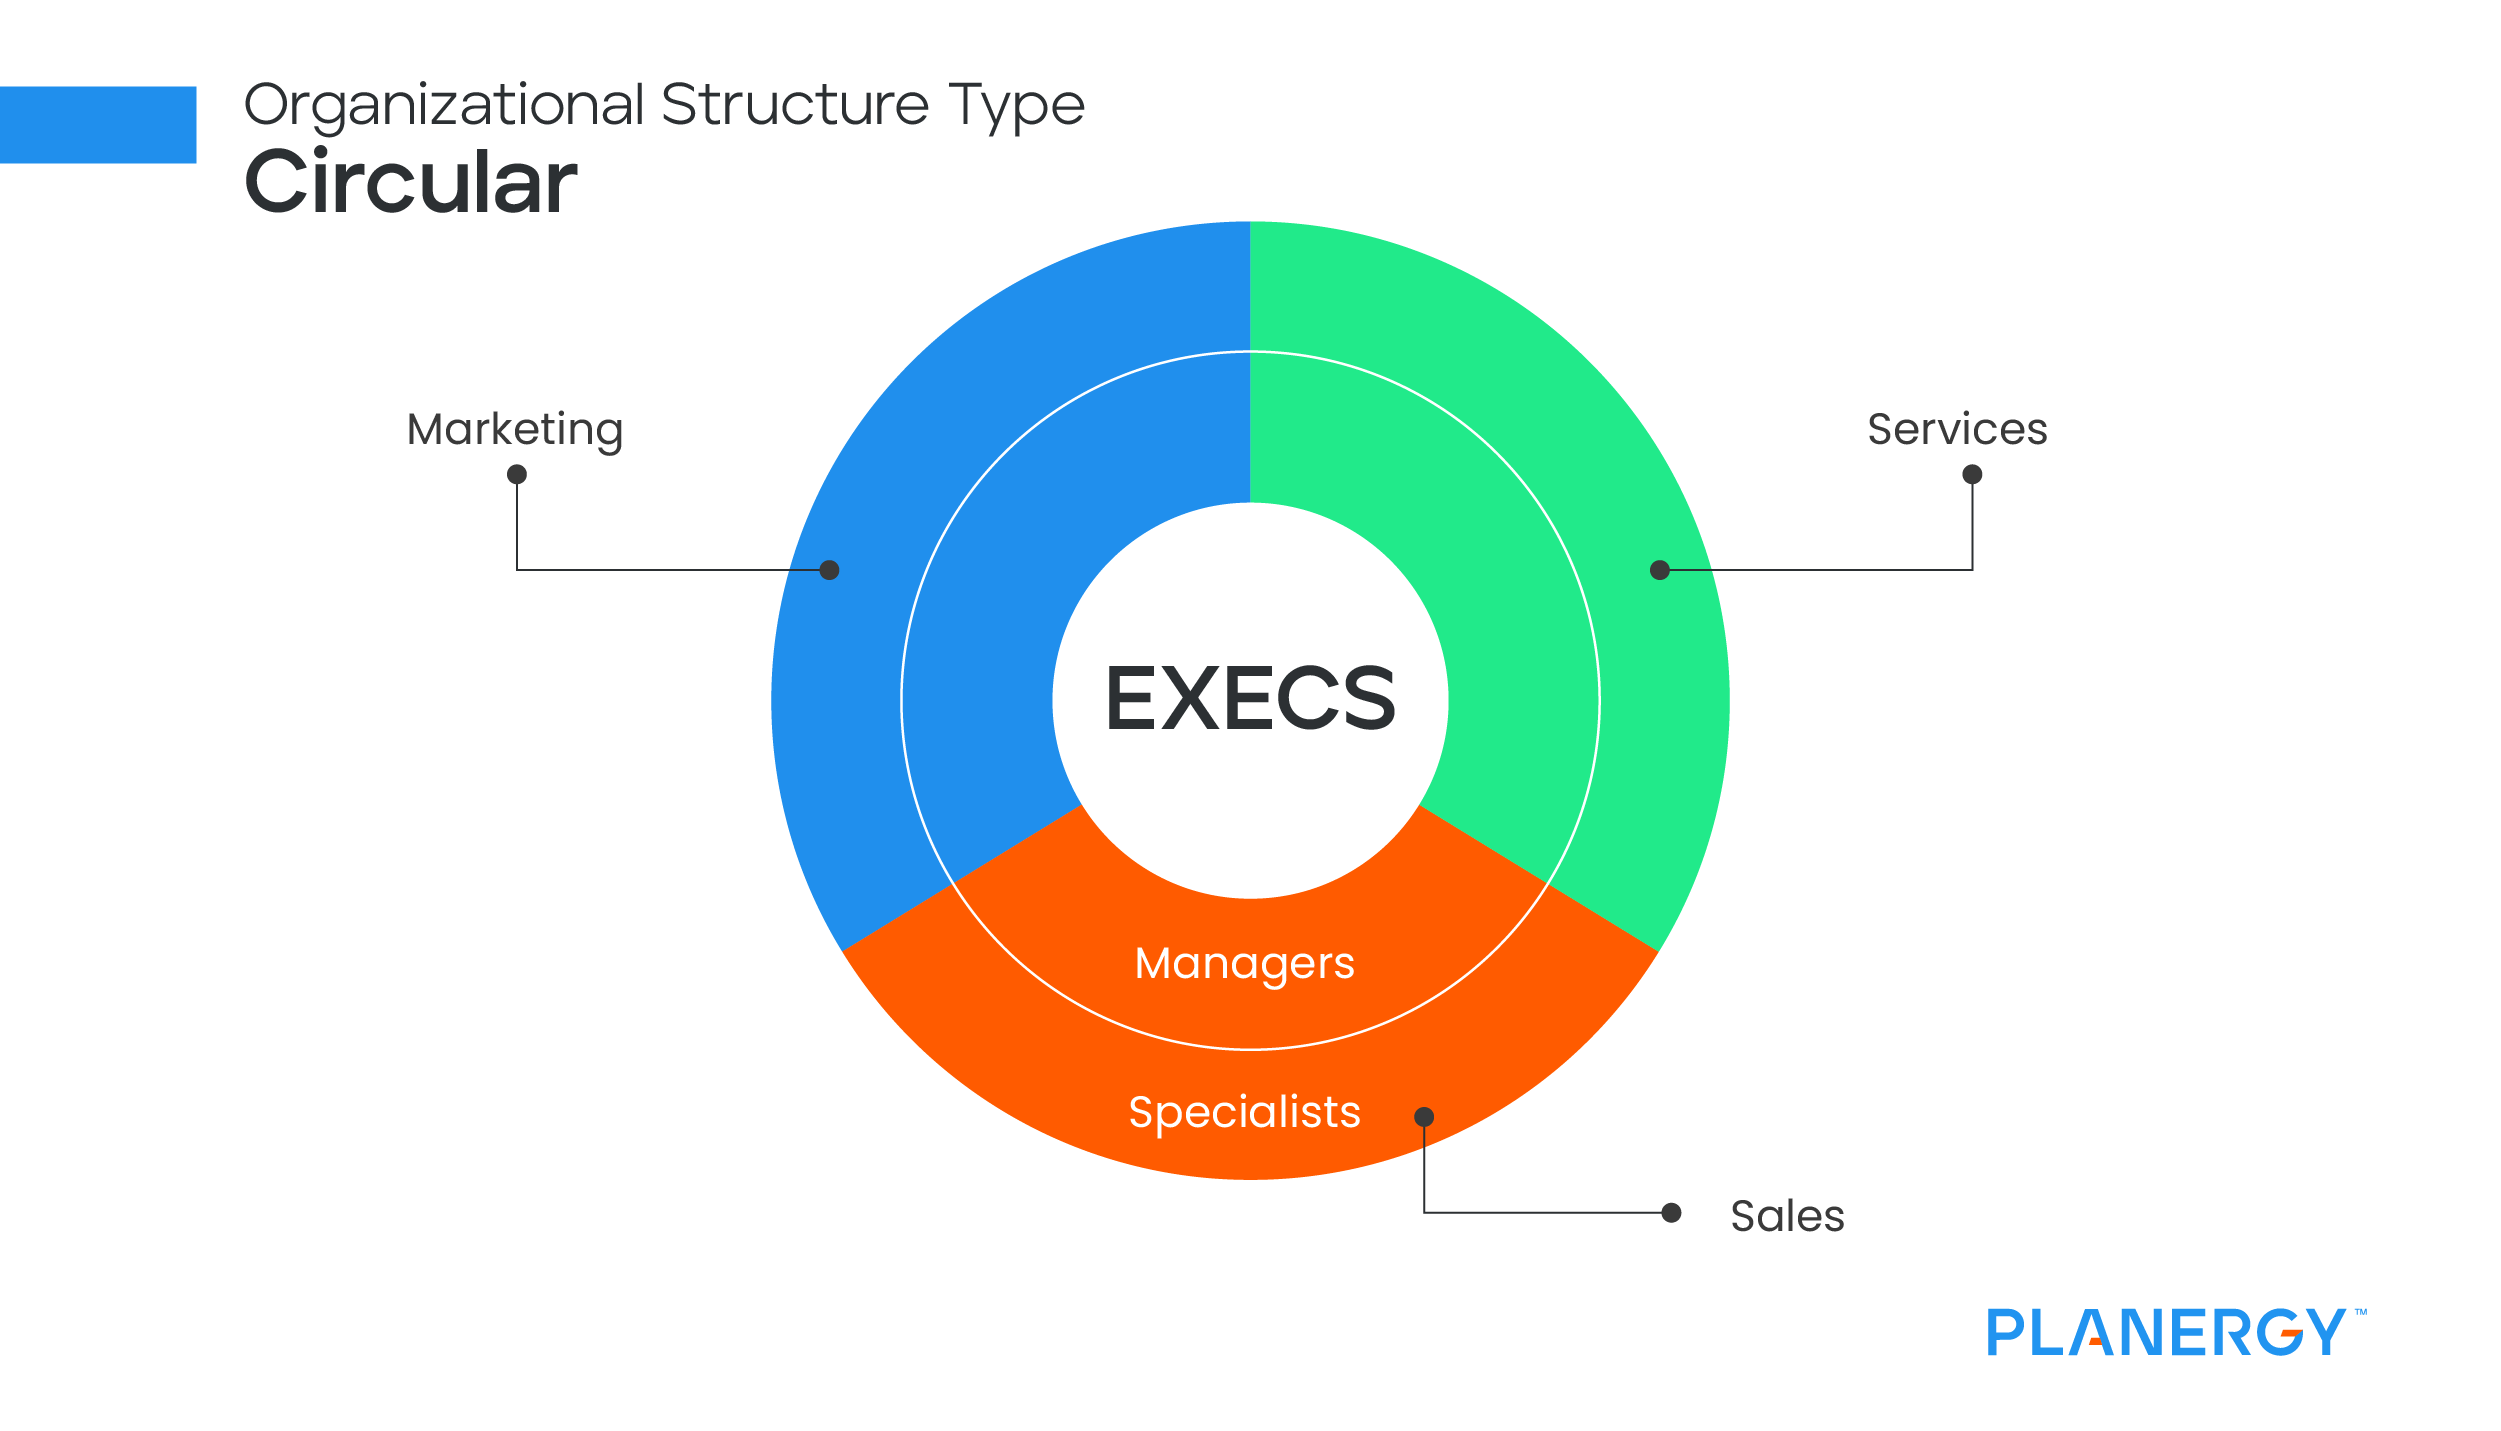 Circular organizational structure